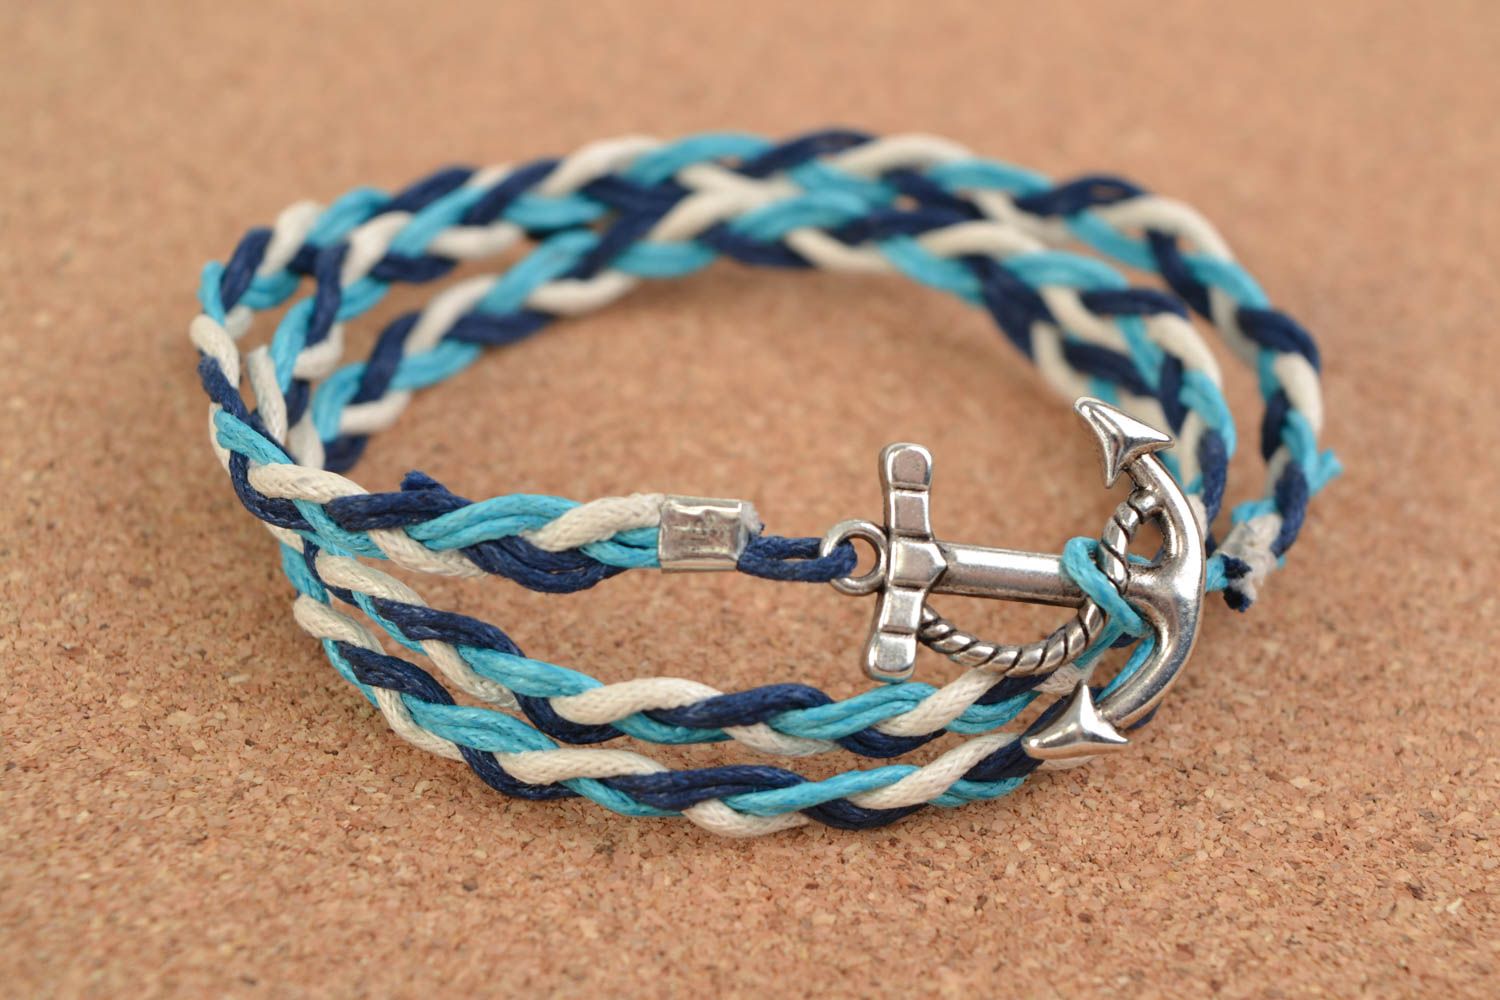 Amazon.com: Anchor cord bracelet, men's bracelet, silver anchor charm, blue  cords, bracelet for men, gift for him, sailor bracelet, clasp, mens jewelry  : Handmade Products